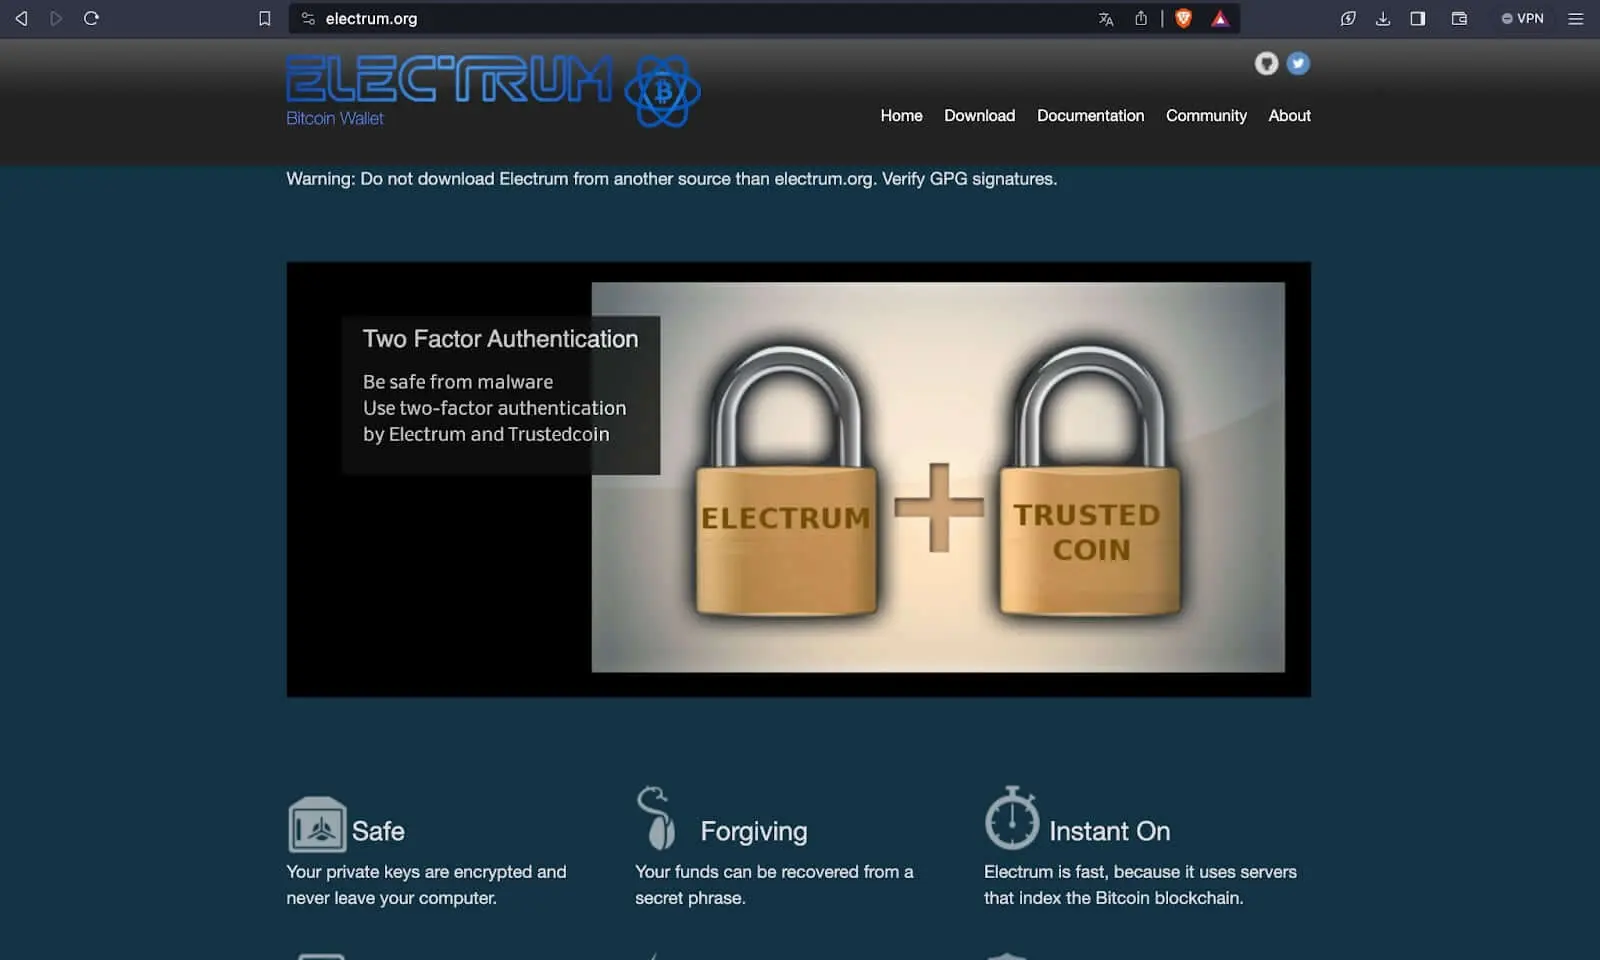 Electrum's Official website